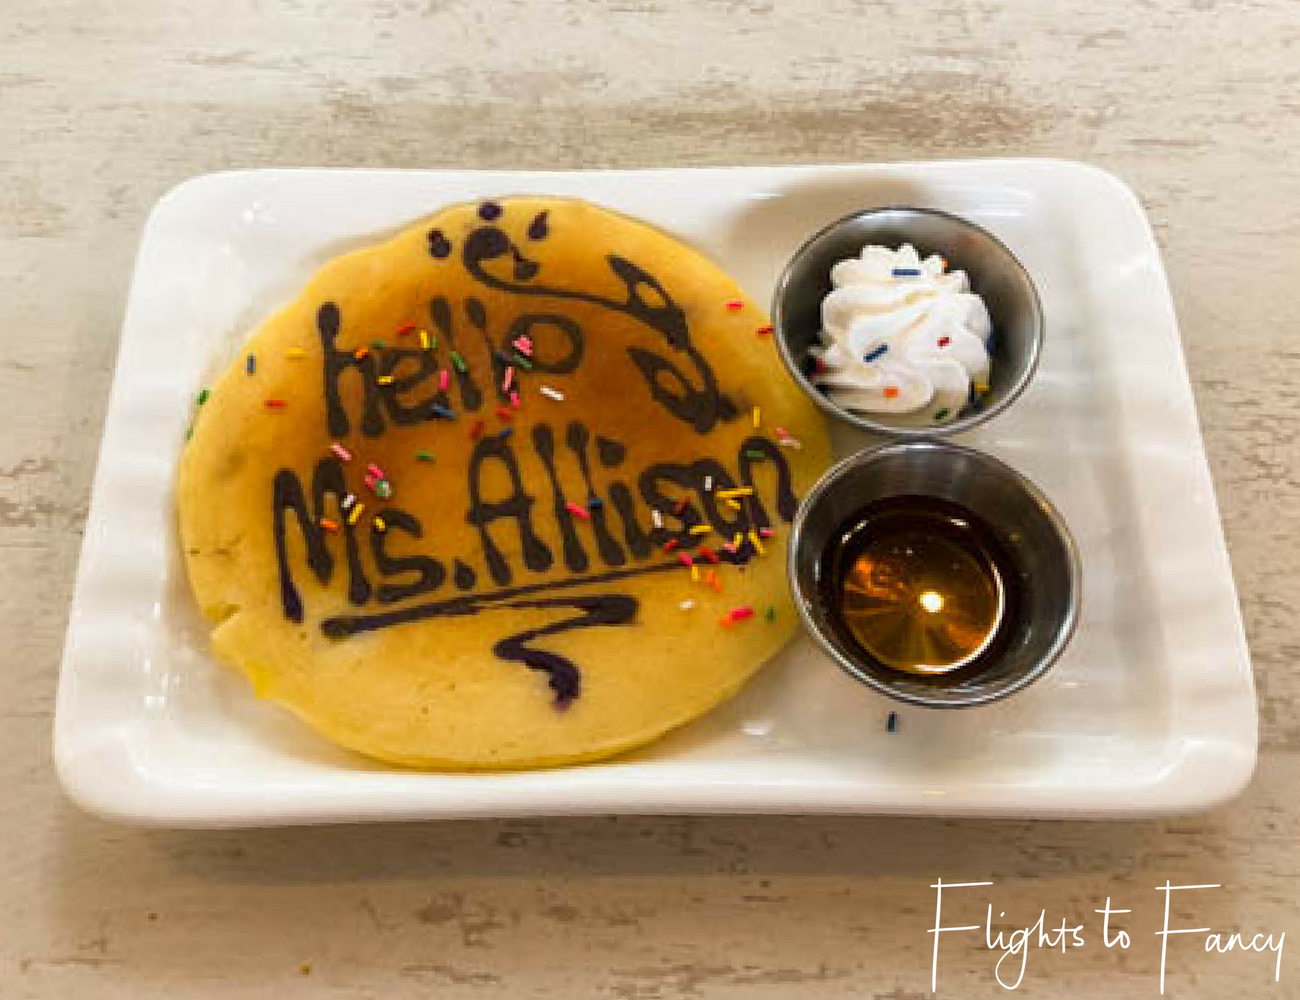 Flights To Fancy at Cha Cha's Boracay - Personalised Pancake